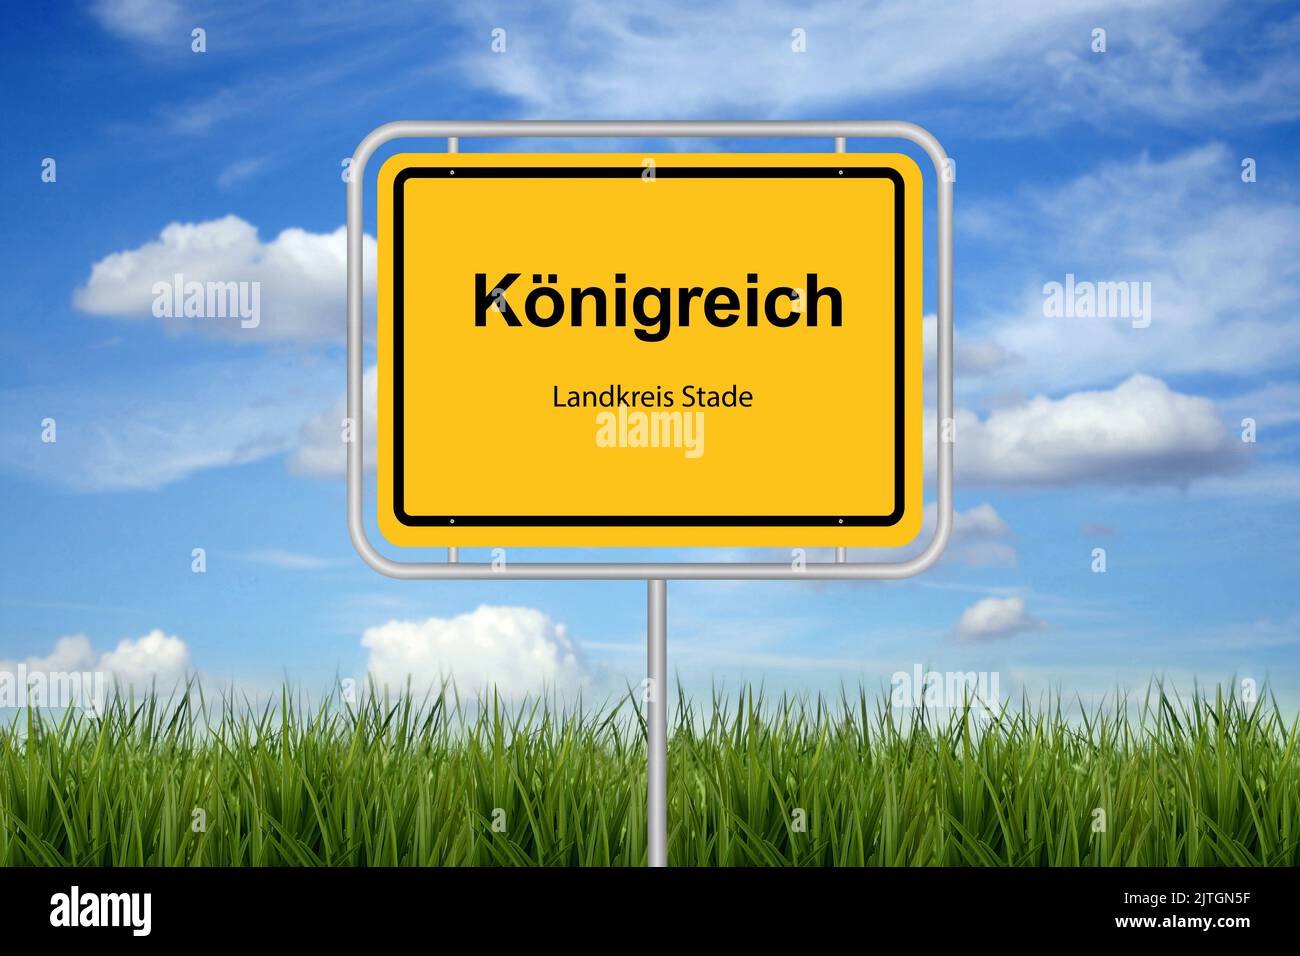 Cartel de la ciudad con letras Koenigreich (reino), Landkreis Stade, Alemania, Baja Sajonia Foto de stock